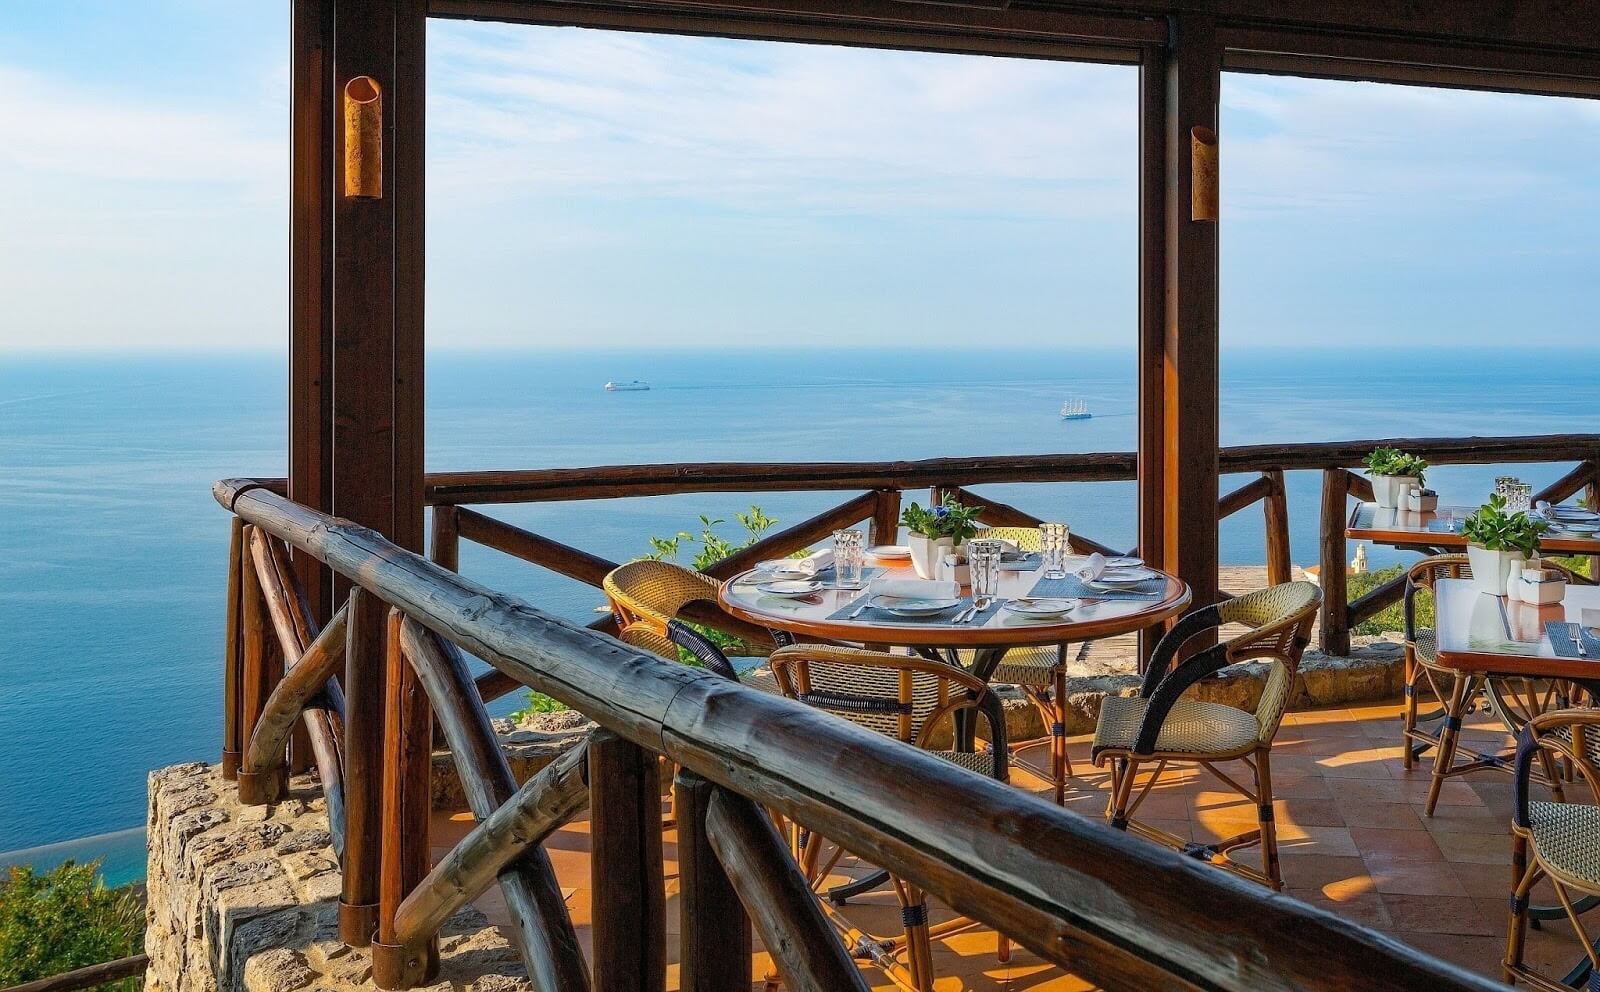 Outdoor dining terrace at Refettorio restuarant, Amalfi coast